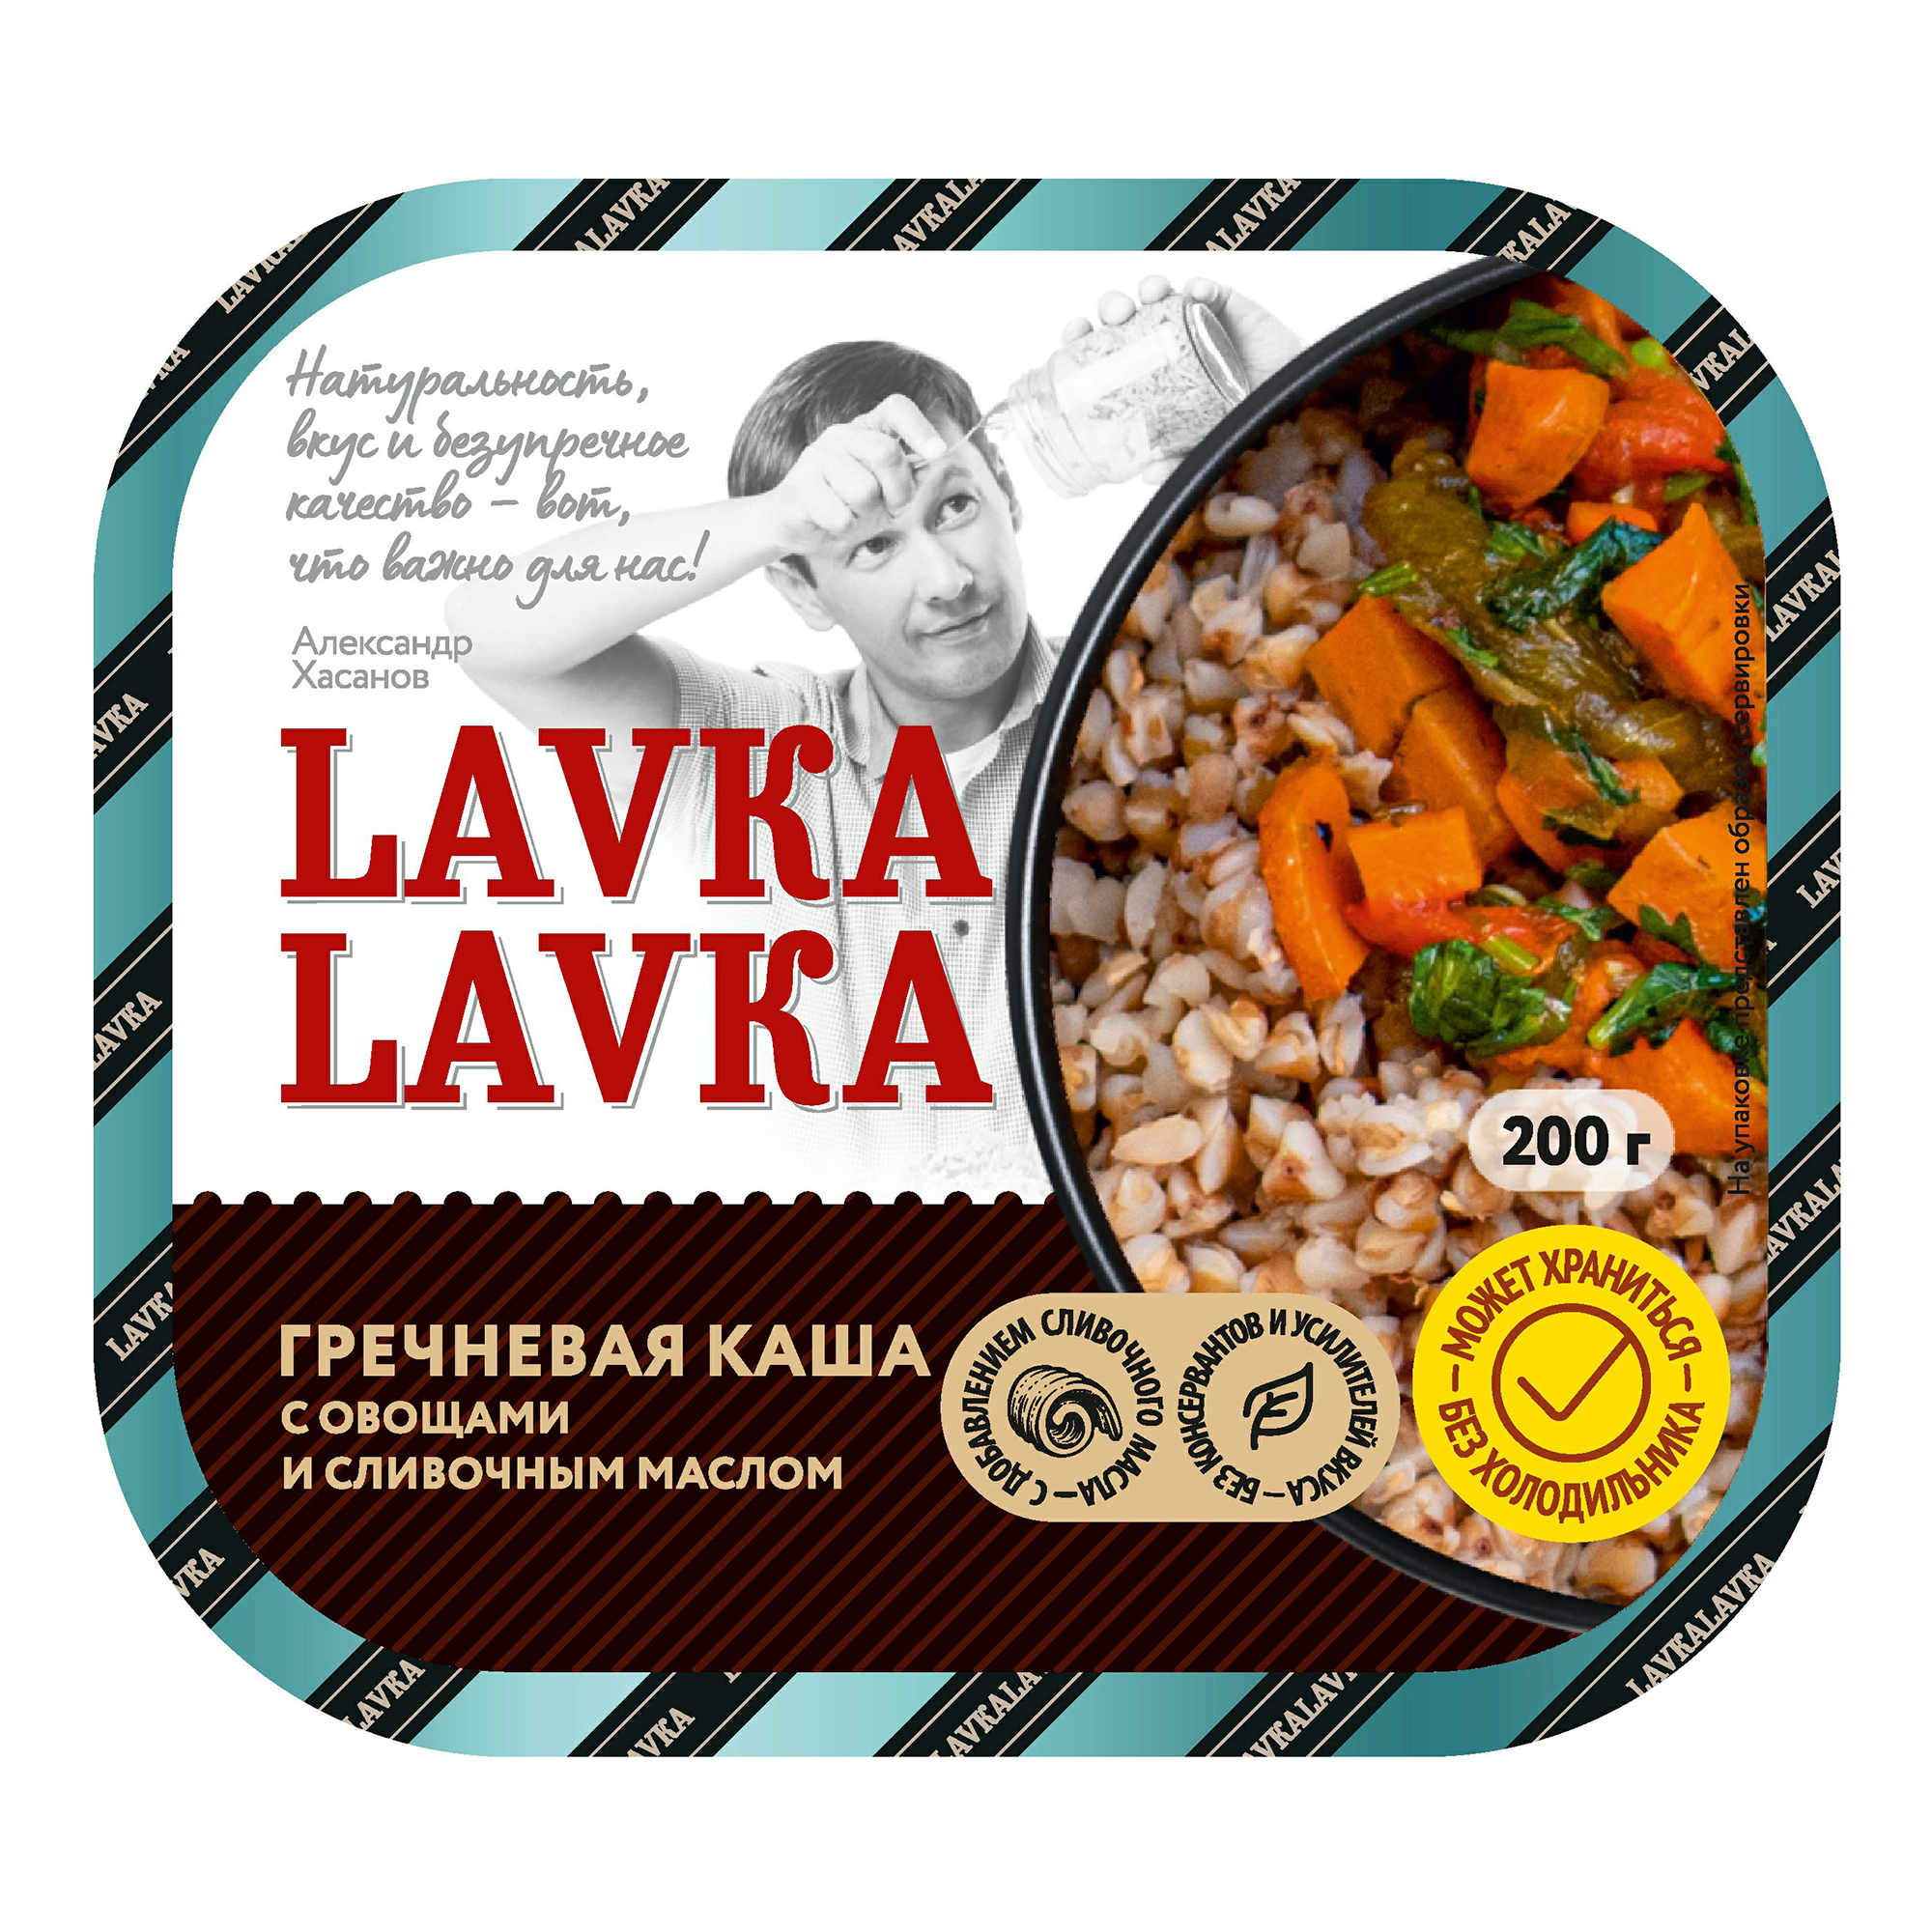 Каша гречневая LavkaLavka с овощами 200 г